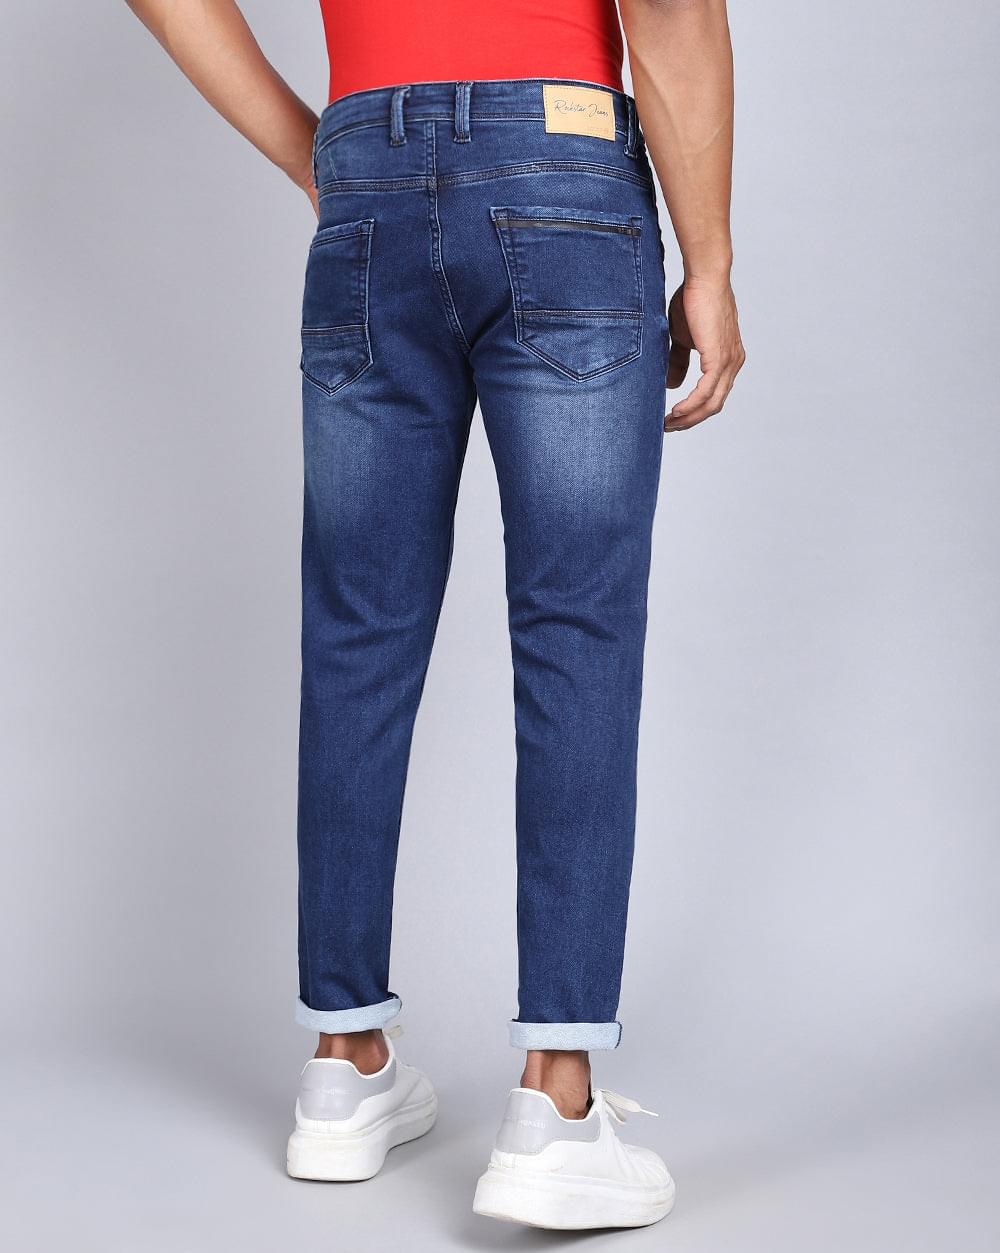 Ankle Fit Popular Mid Blue Jeans for Men 